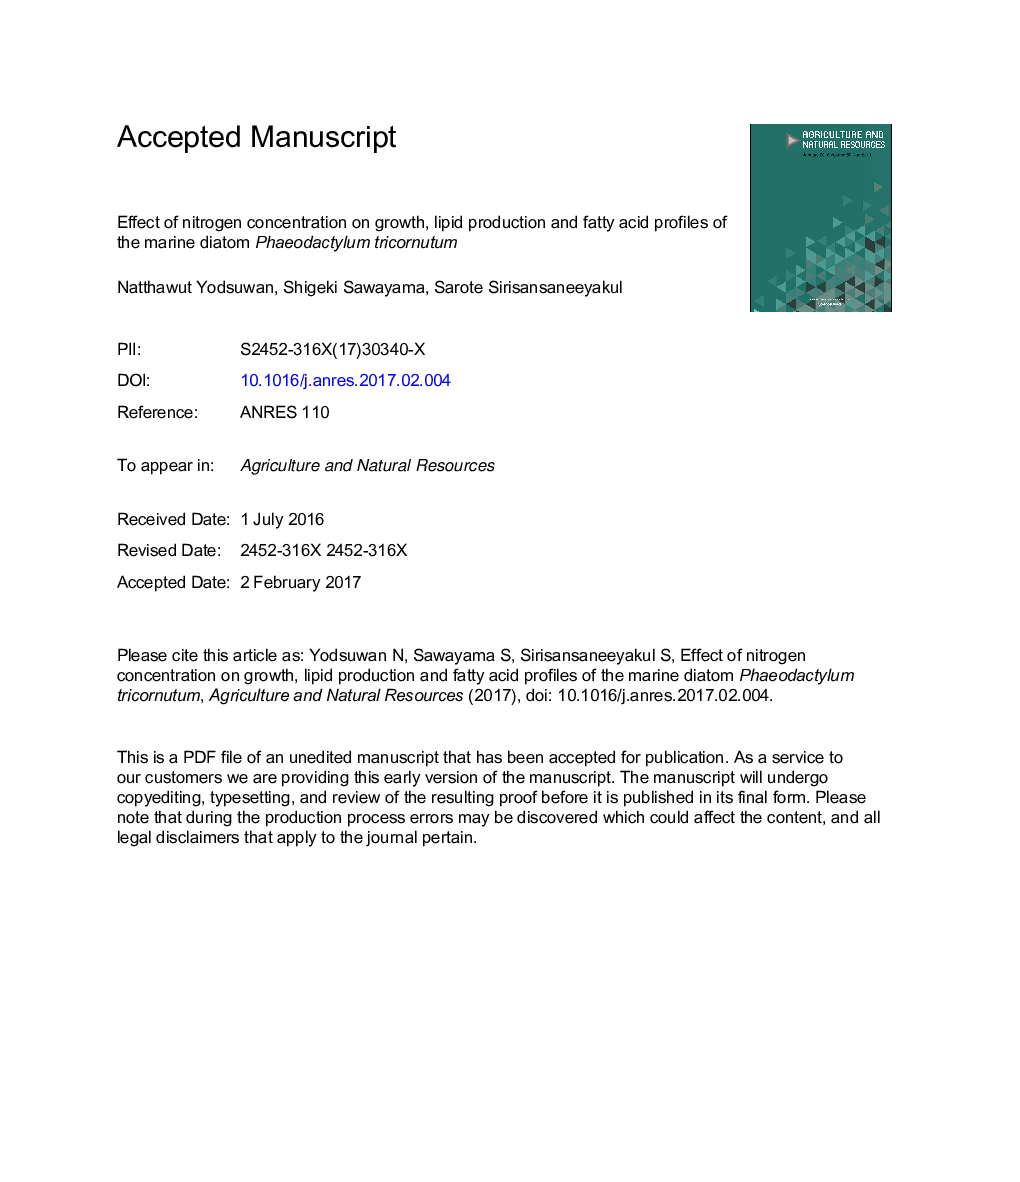 Effect of nitrogen concentration on growth, lipid production and fatty acid profiles of the marine diatom Phaeodactylum tricornutum